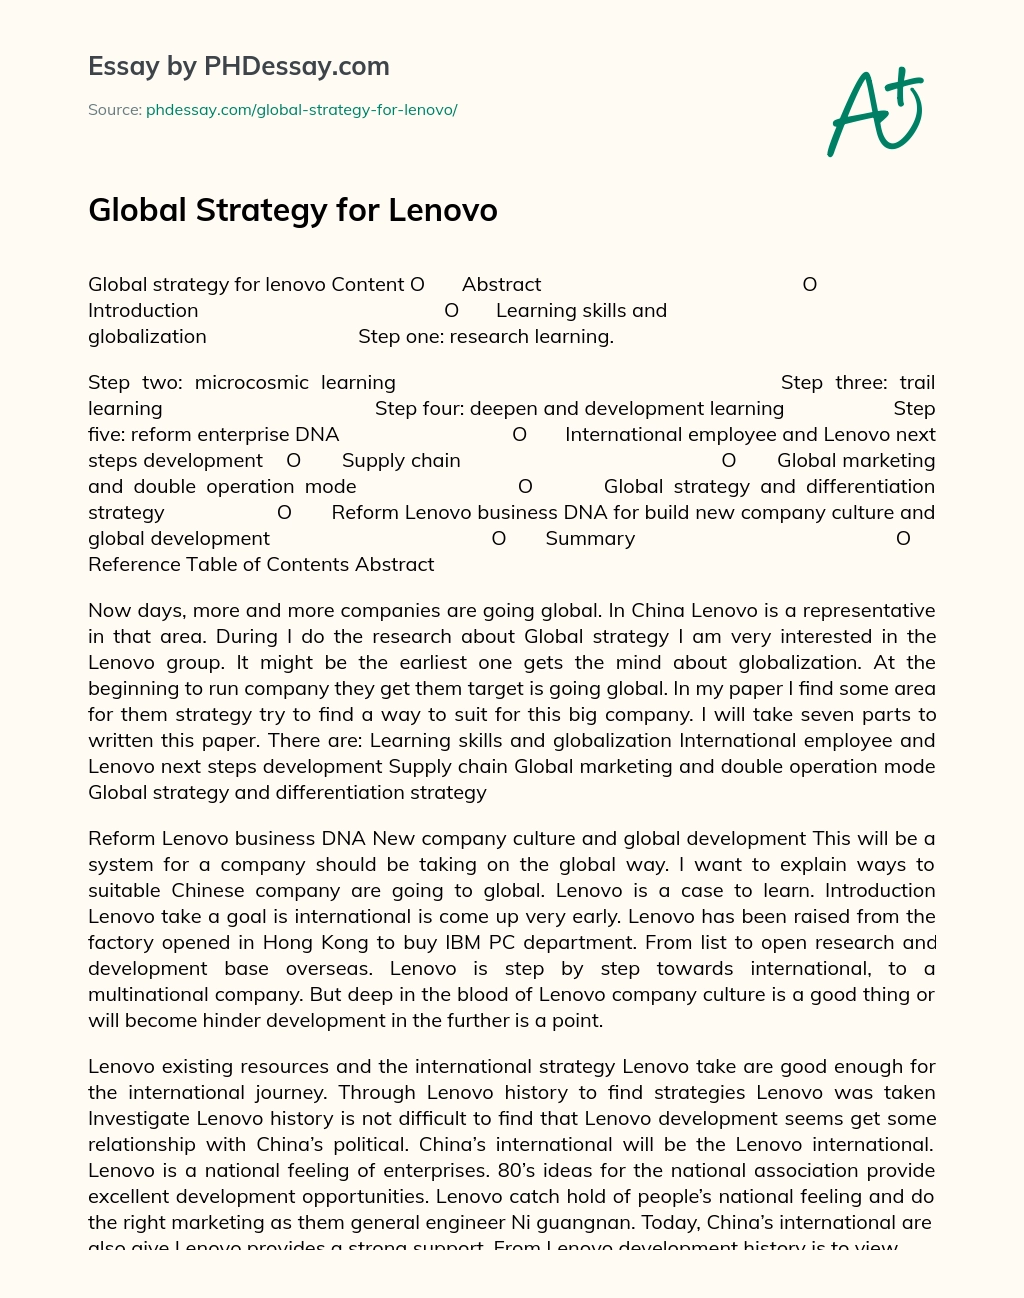 Global Strategy for Lenovo essay